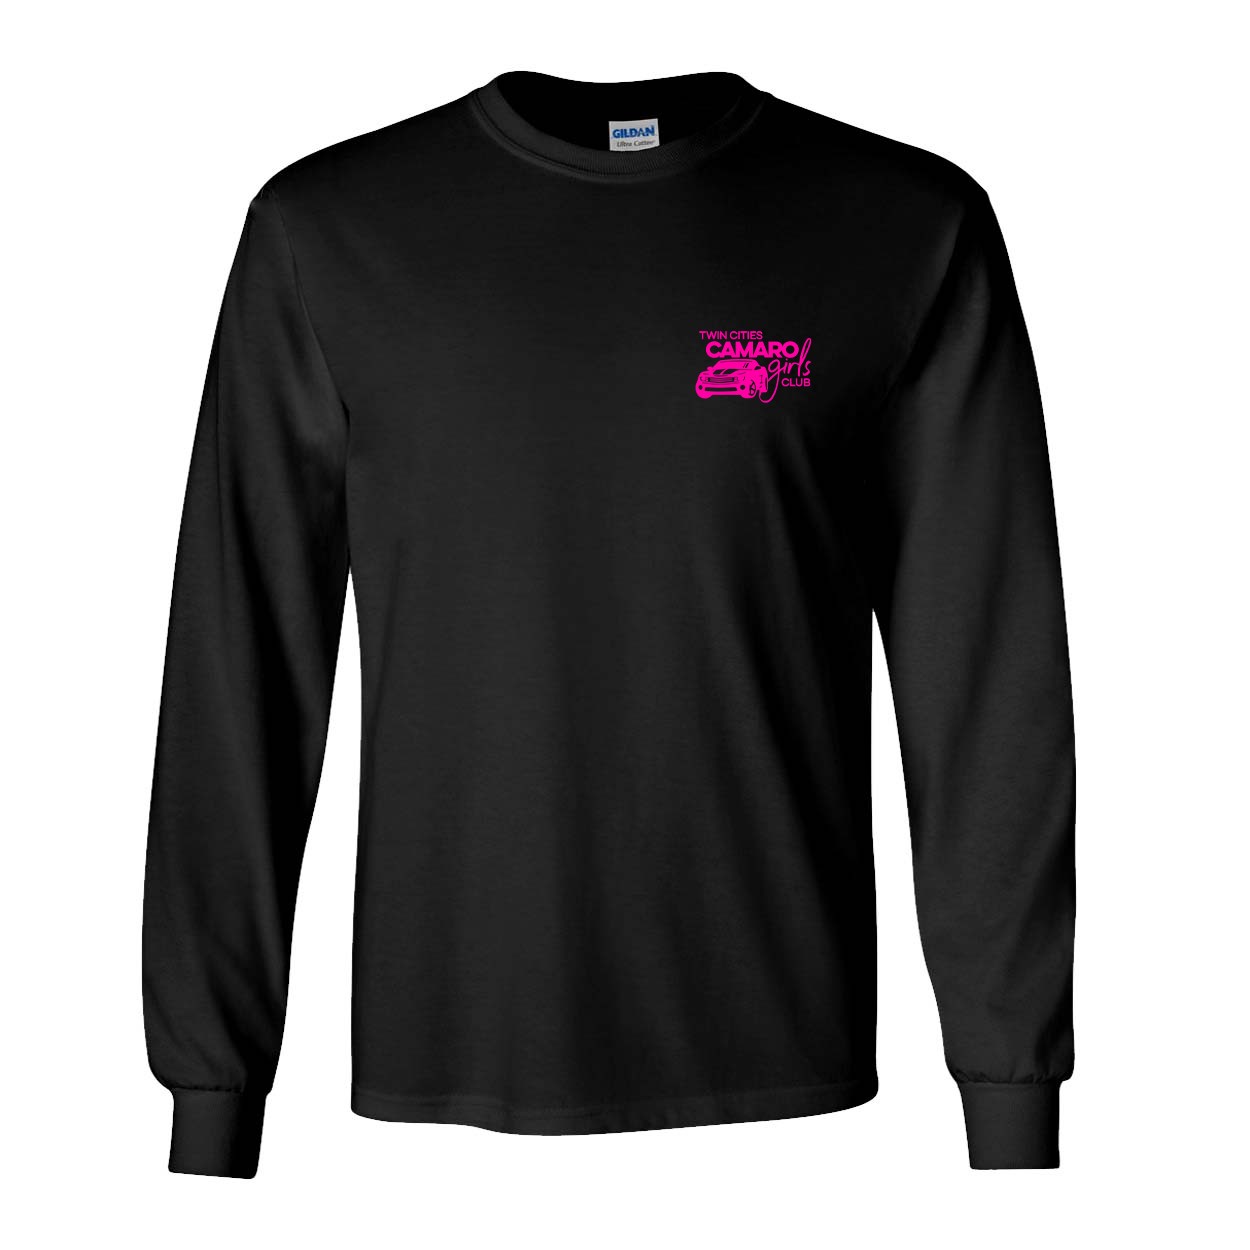 Camaro Minnesota Night Out Twin Cities Girls Club Long Sleeve T-Shirt Black (Pink Logo)